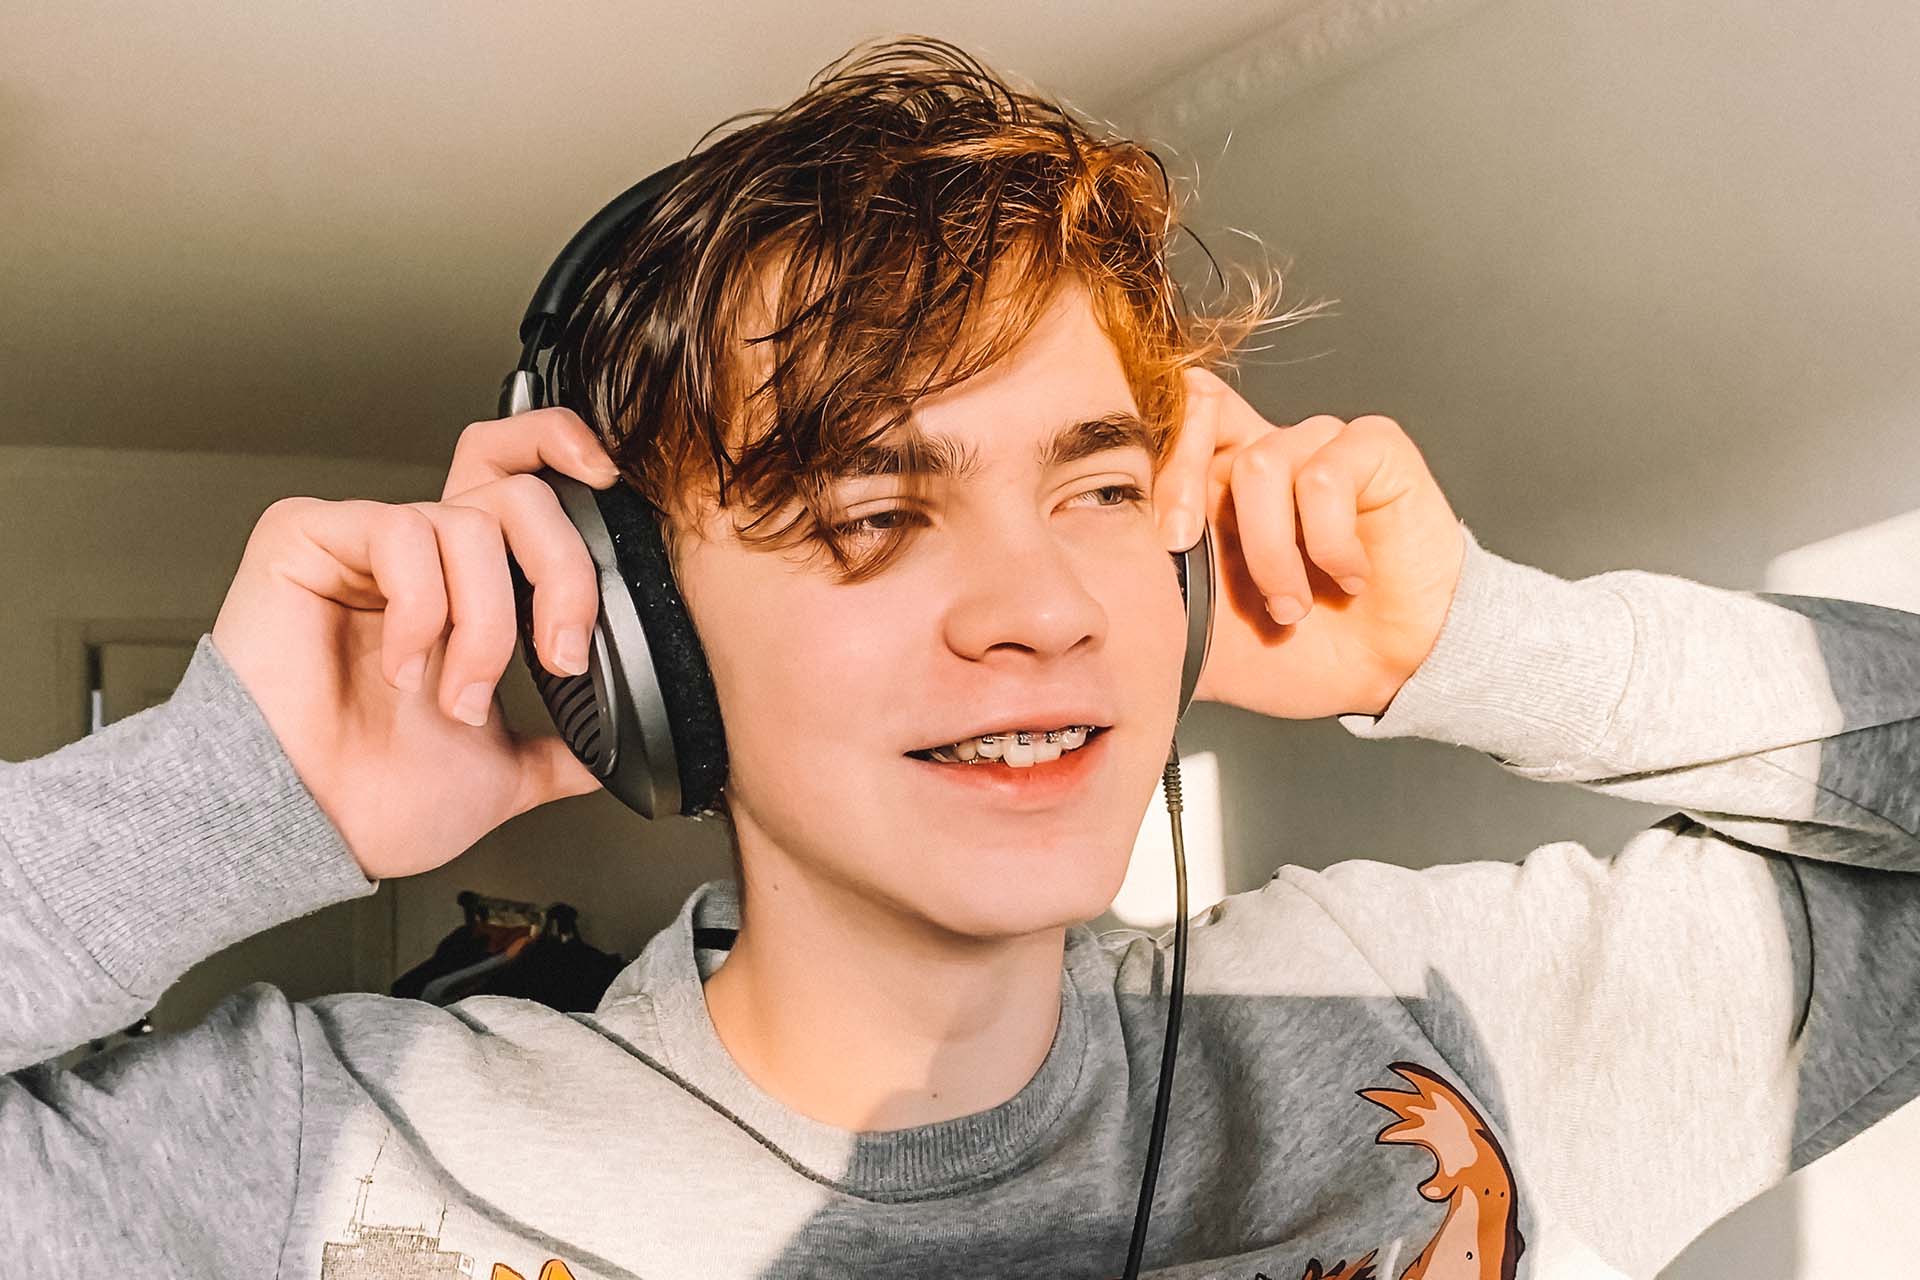 Teen boy with braces listens to music on headphones in Bel Air, Los Angeles, CA